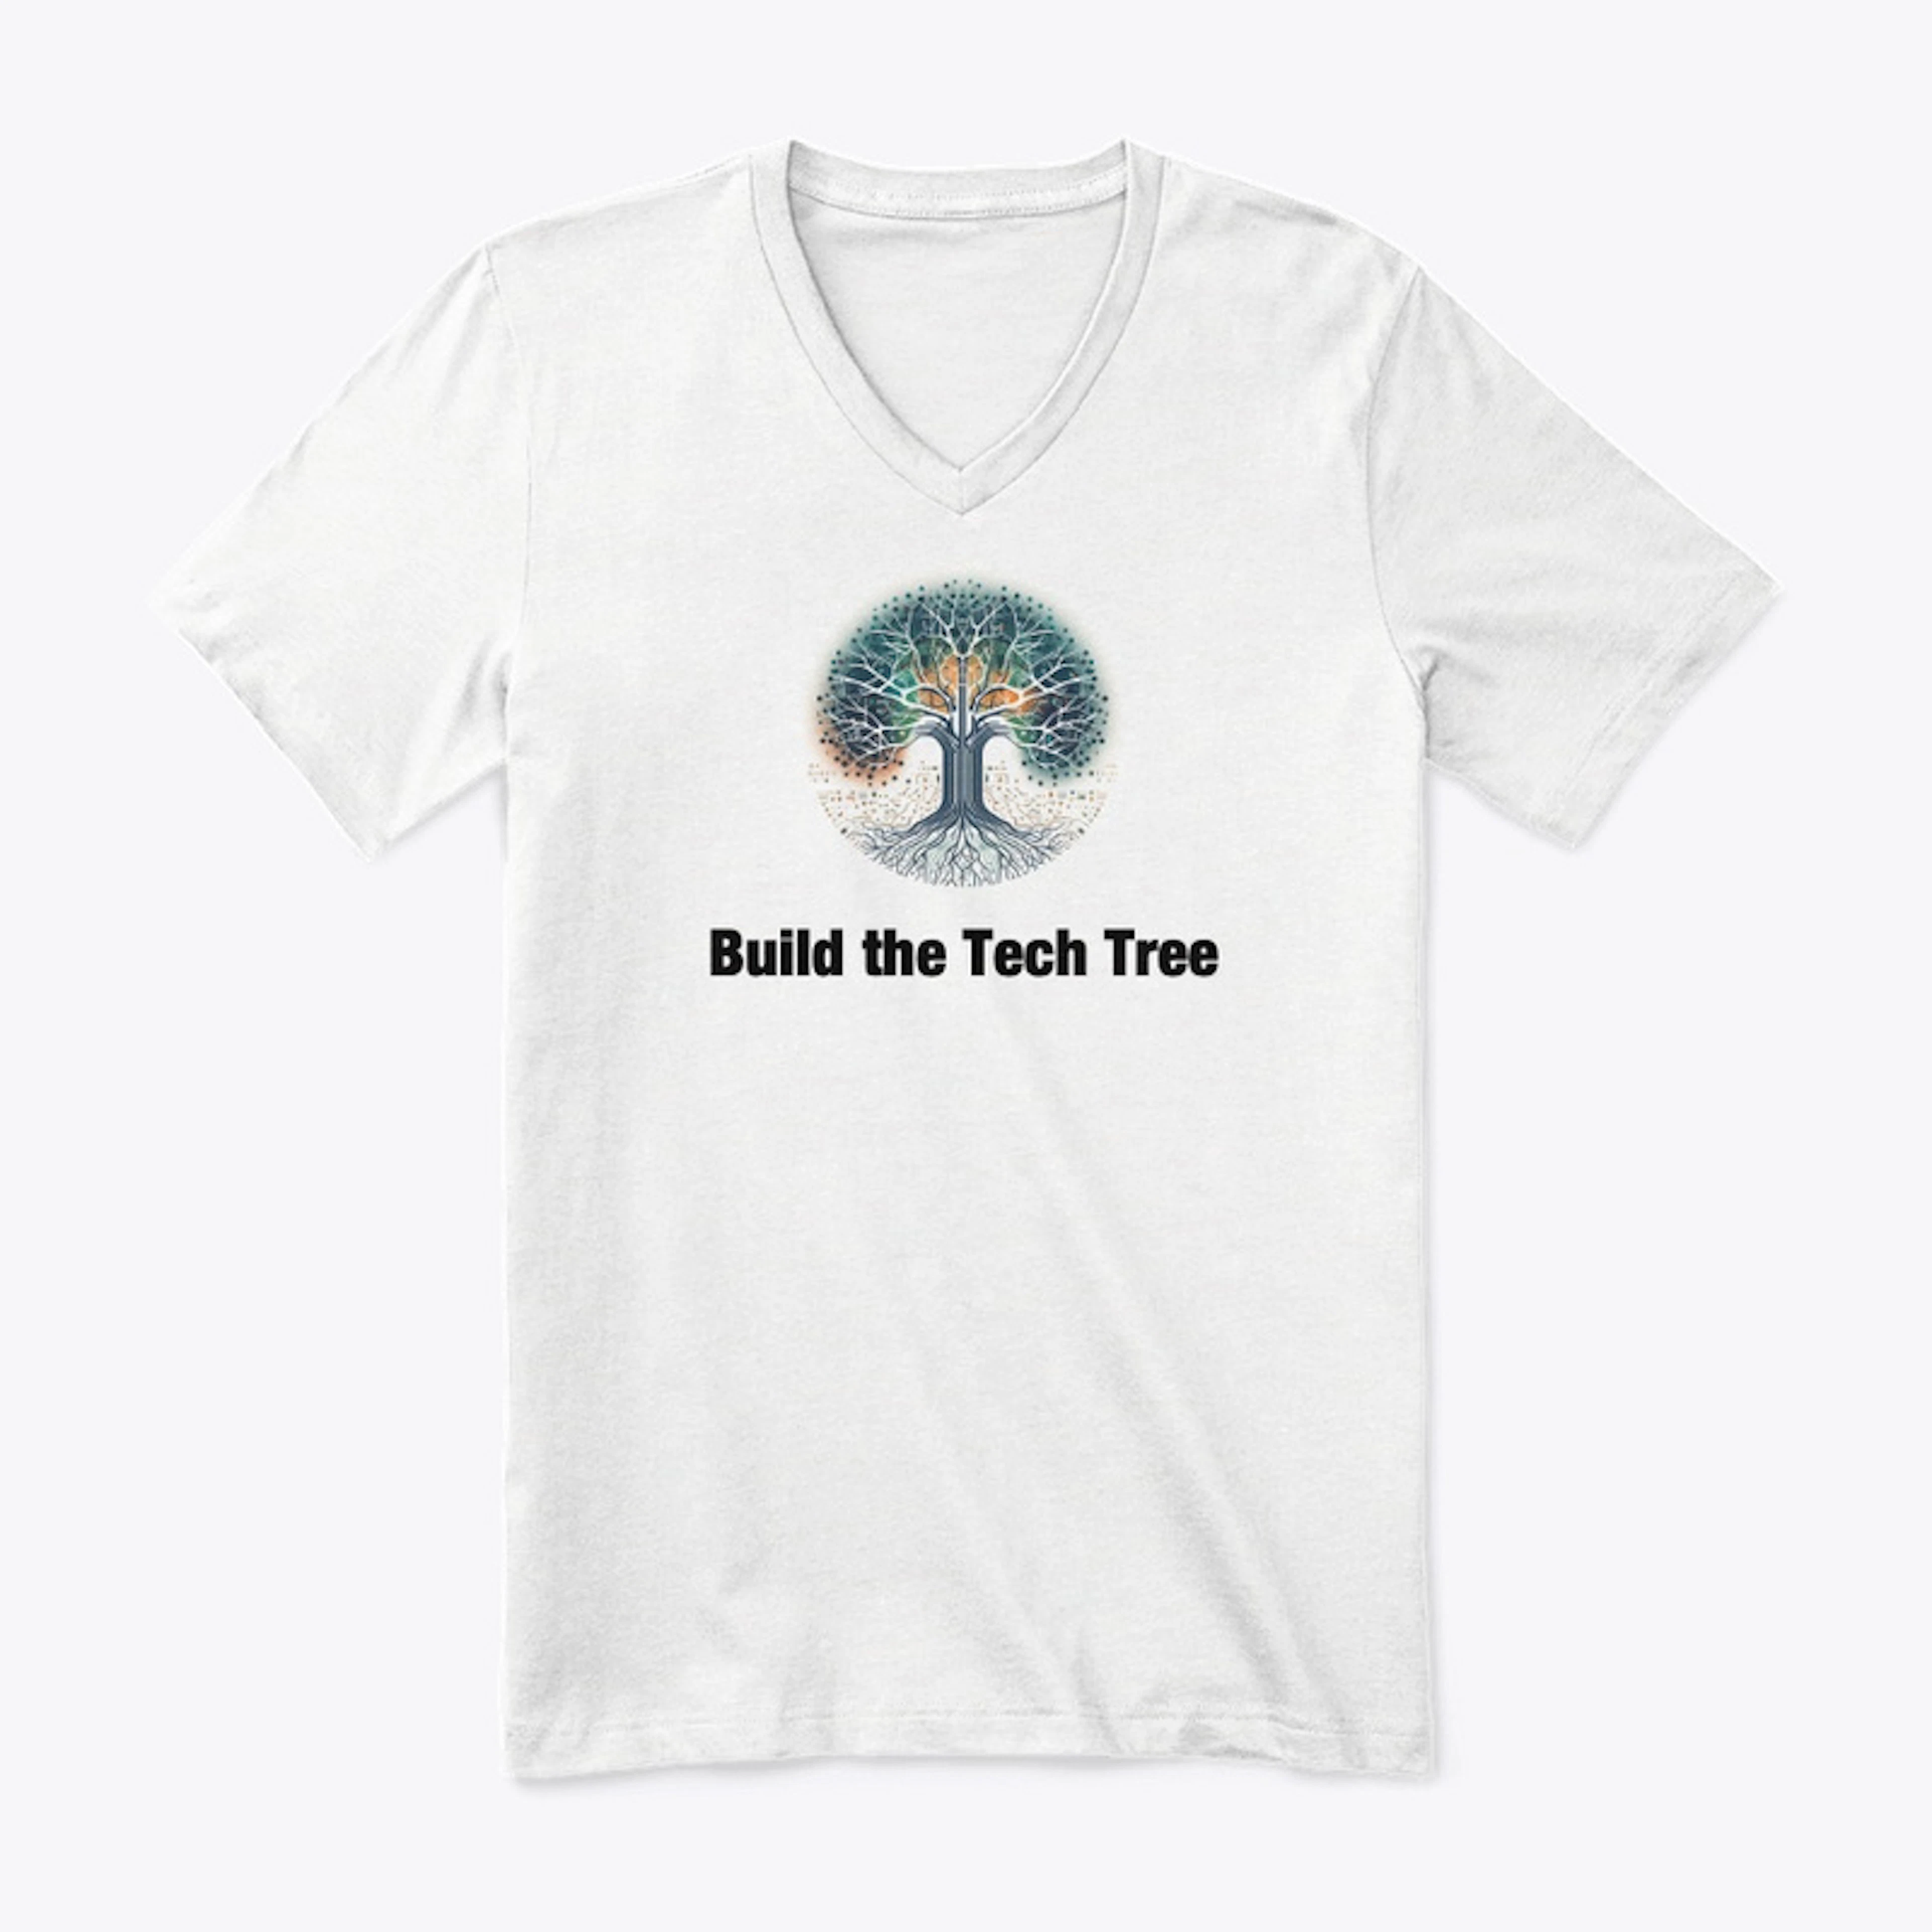 Build the Tech Tree